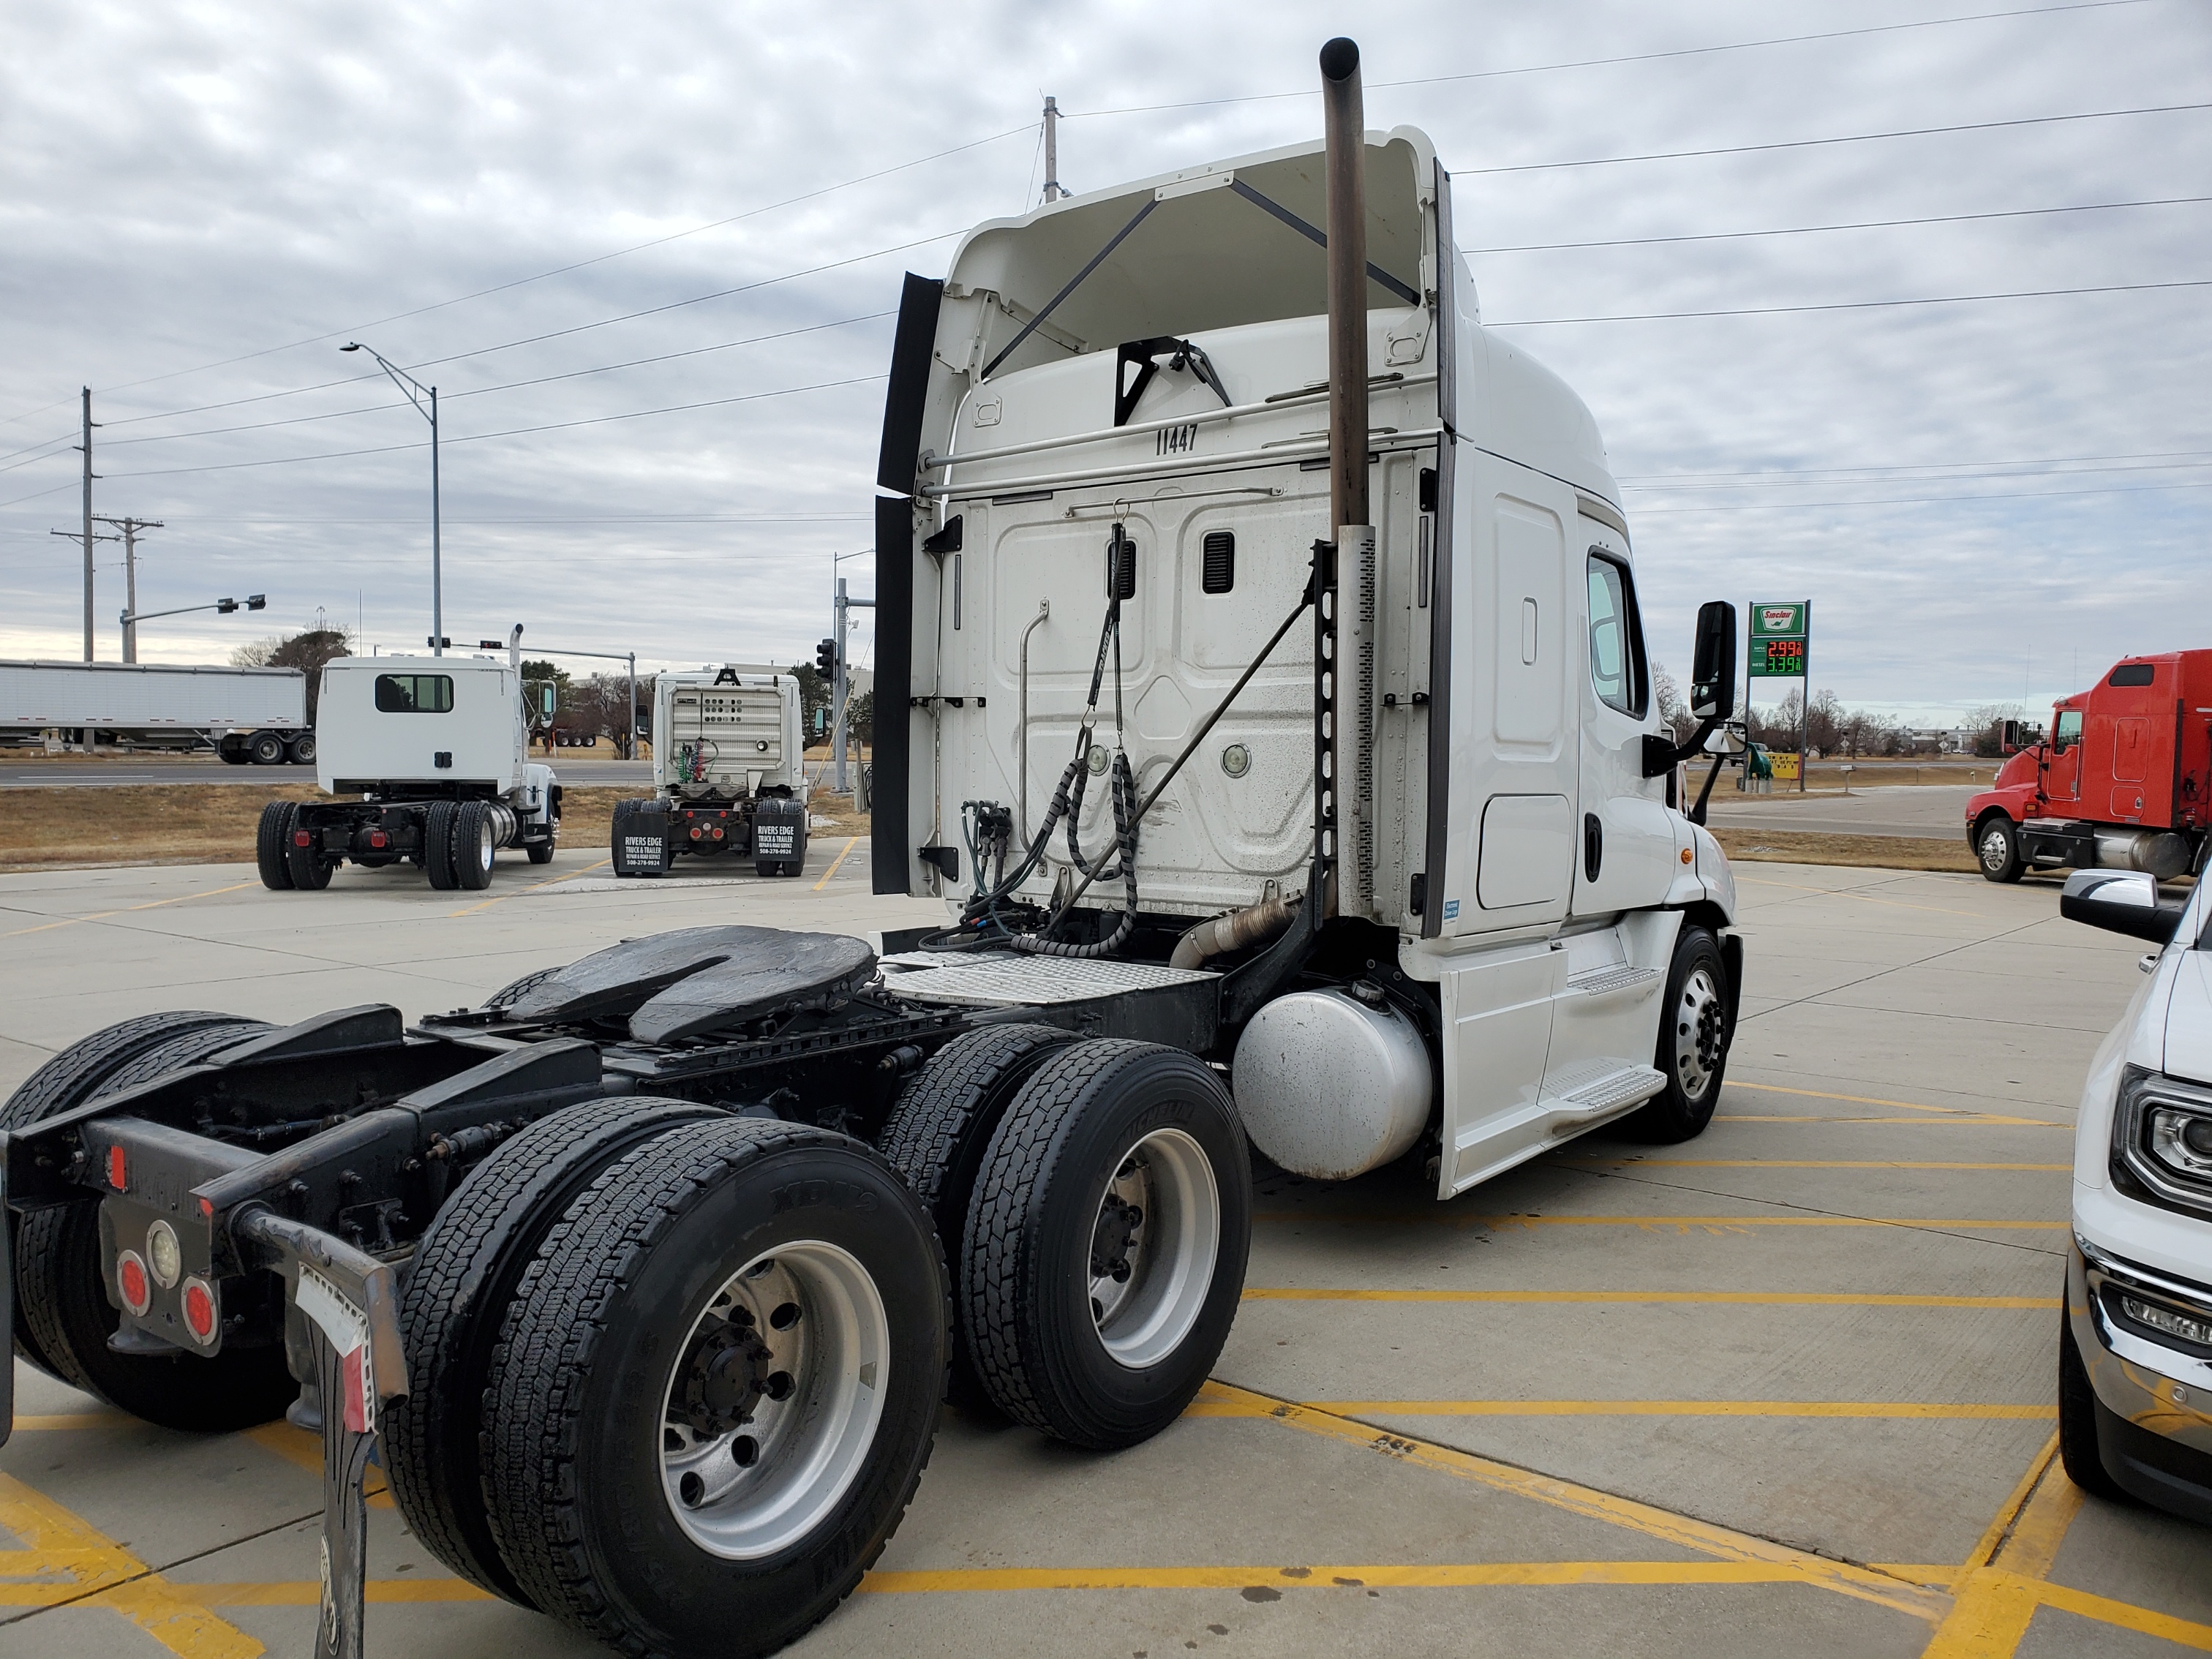 2015 FREIGHTLINER CA113 CASCADIA : TCJ202 | Truck Center Companies